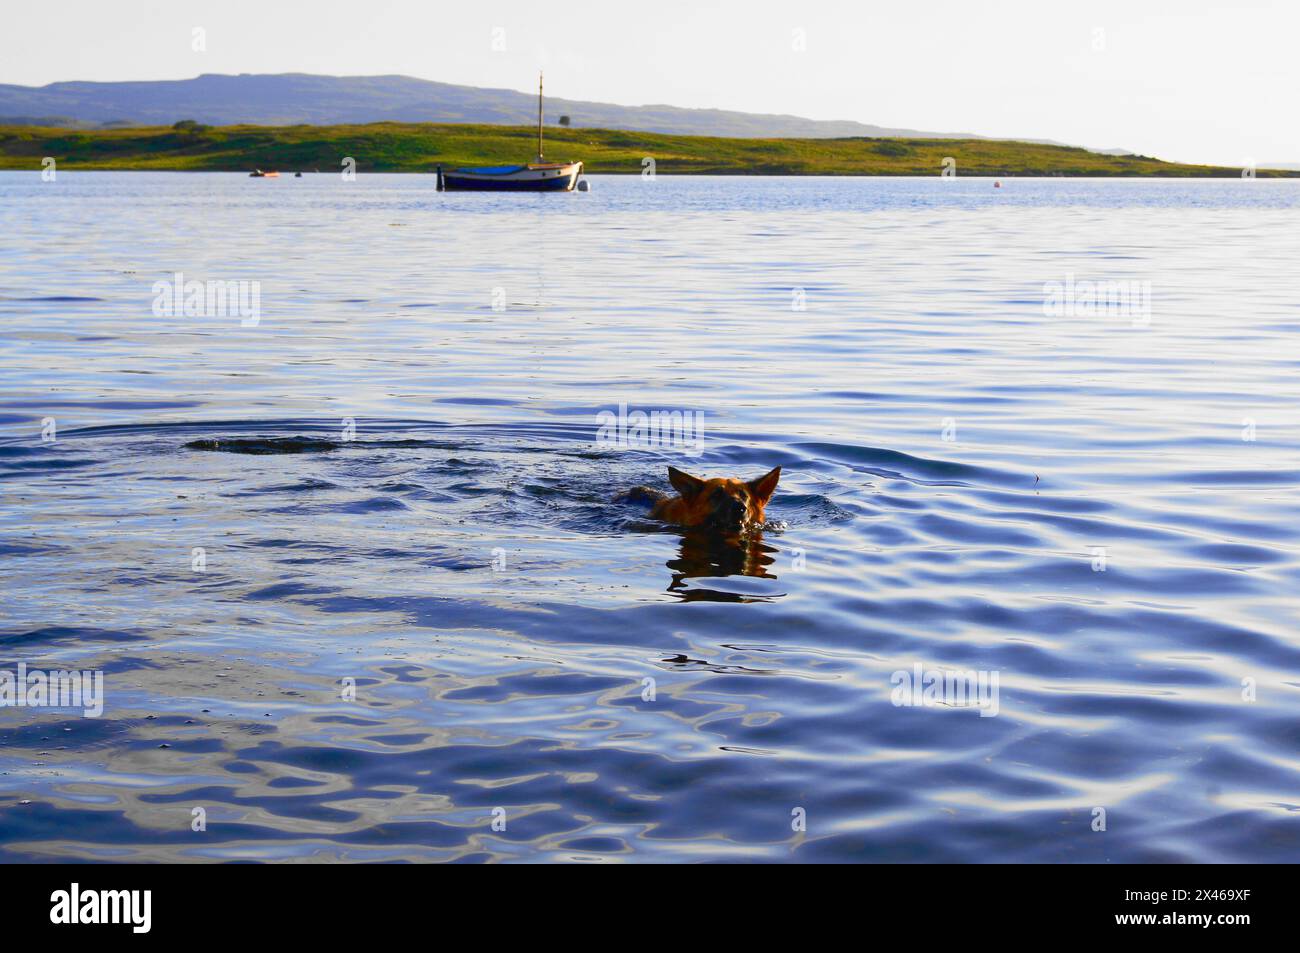 German Shepherd Swimming in Loch Beg on the Isle of Mull, Scotland, UK Stock Photo